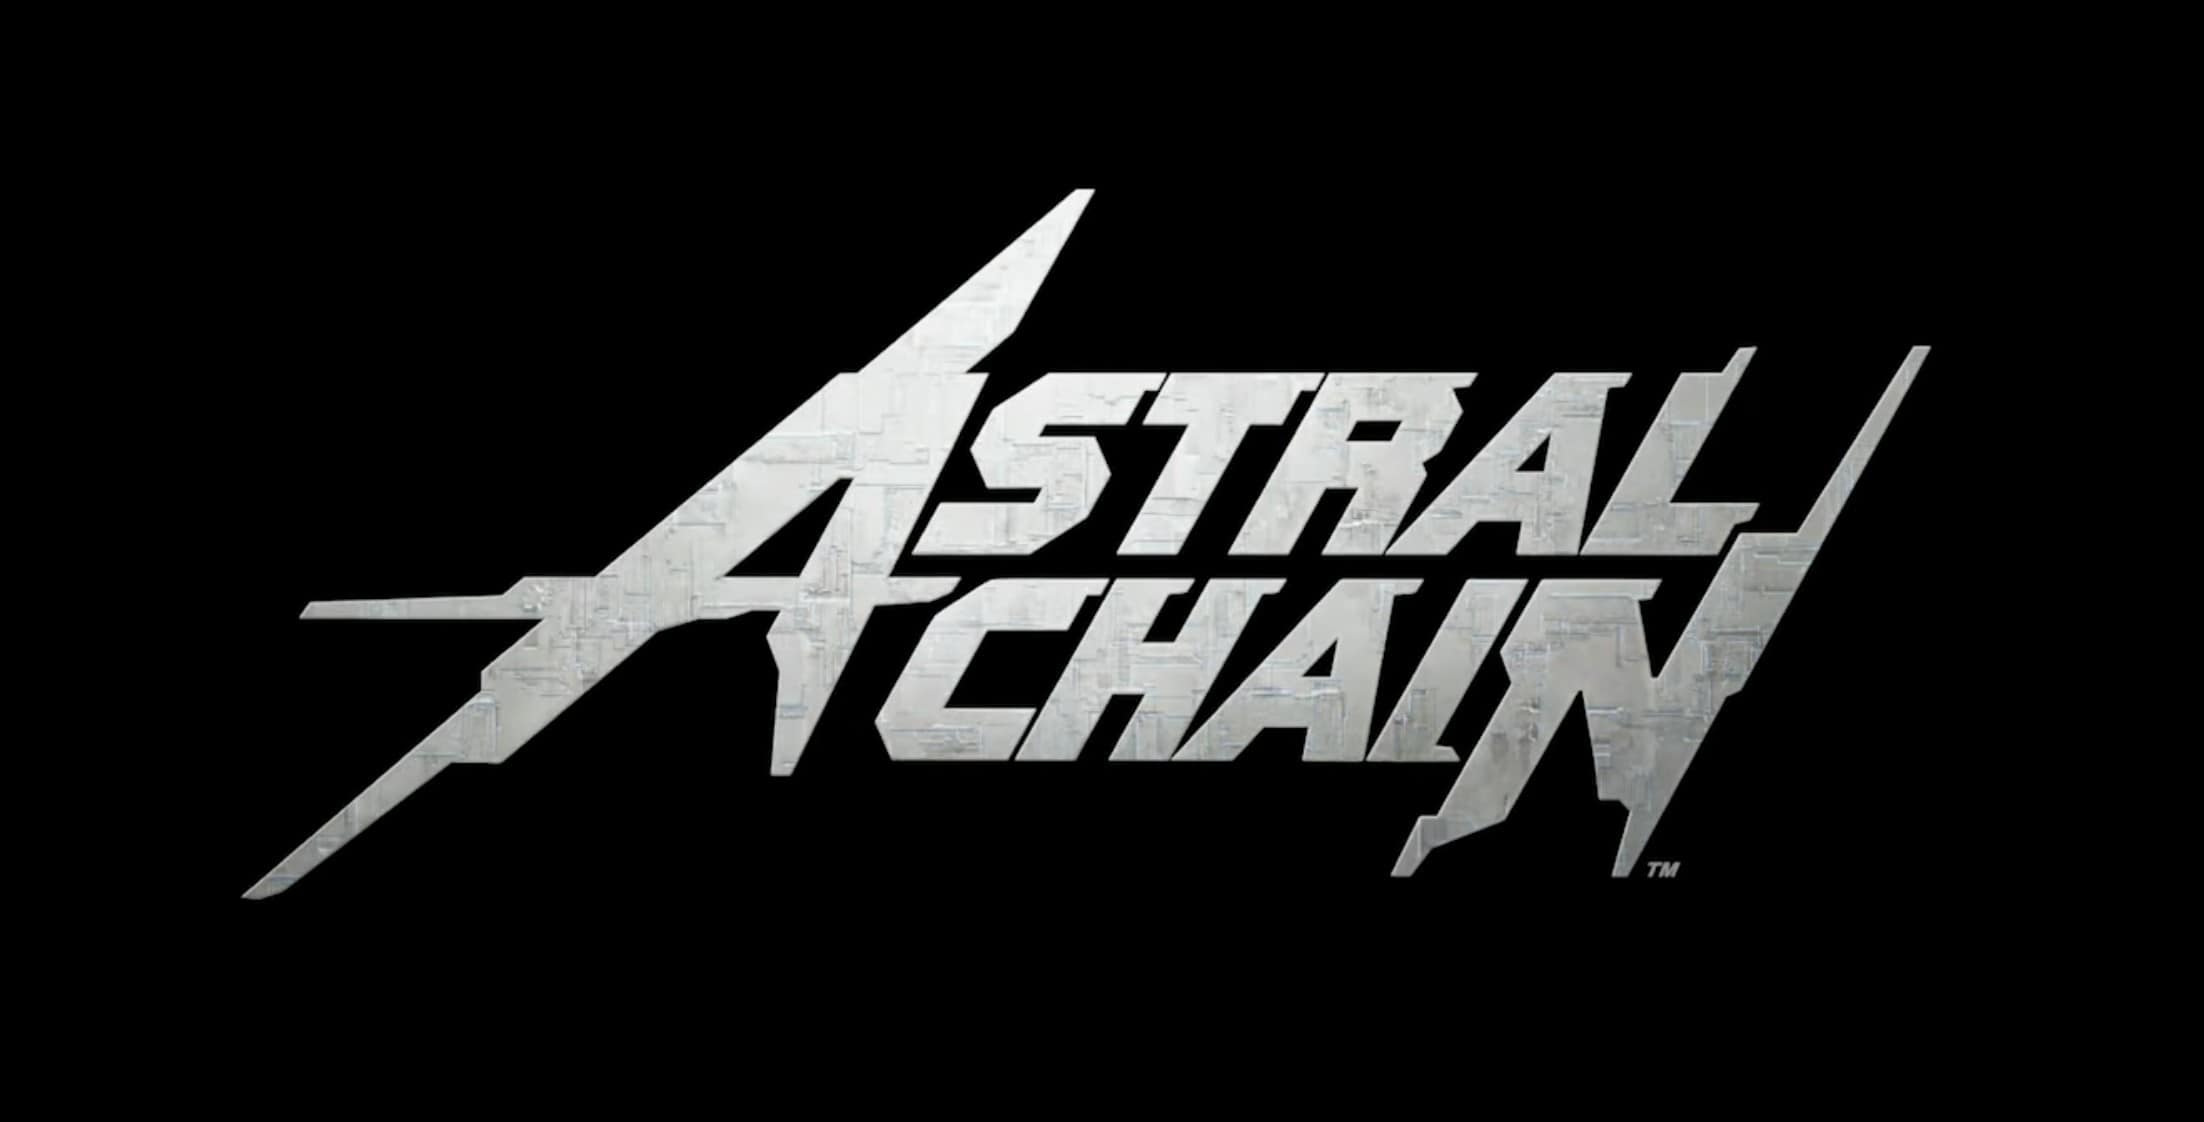 Astral Chain logo